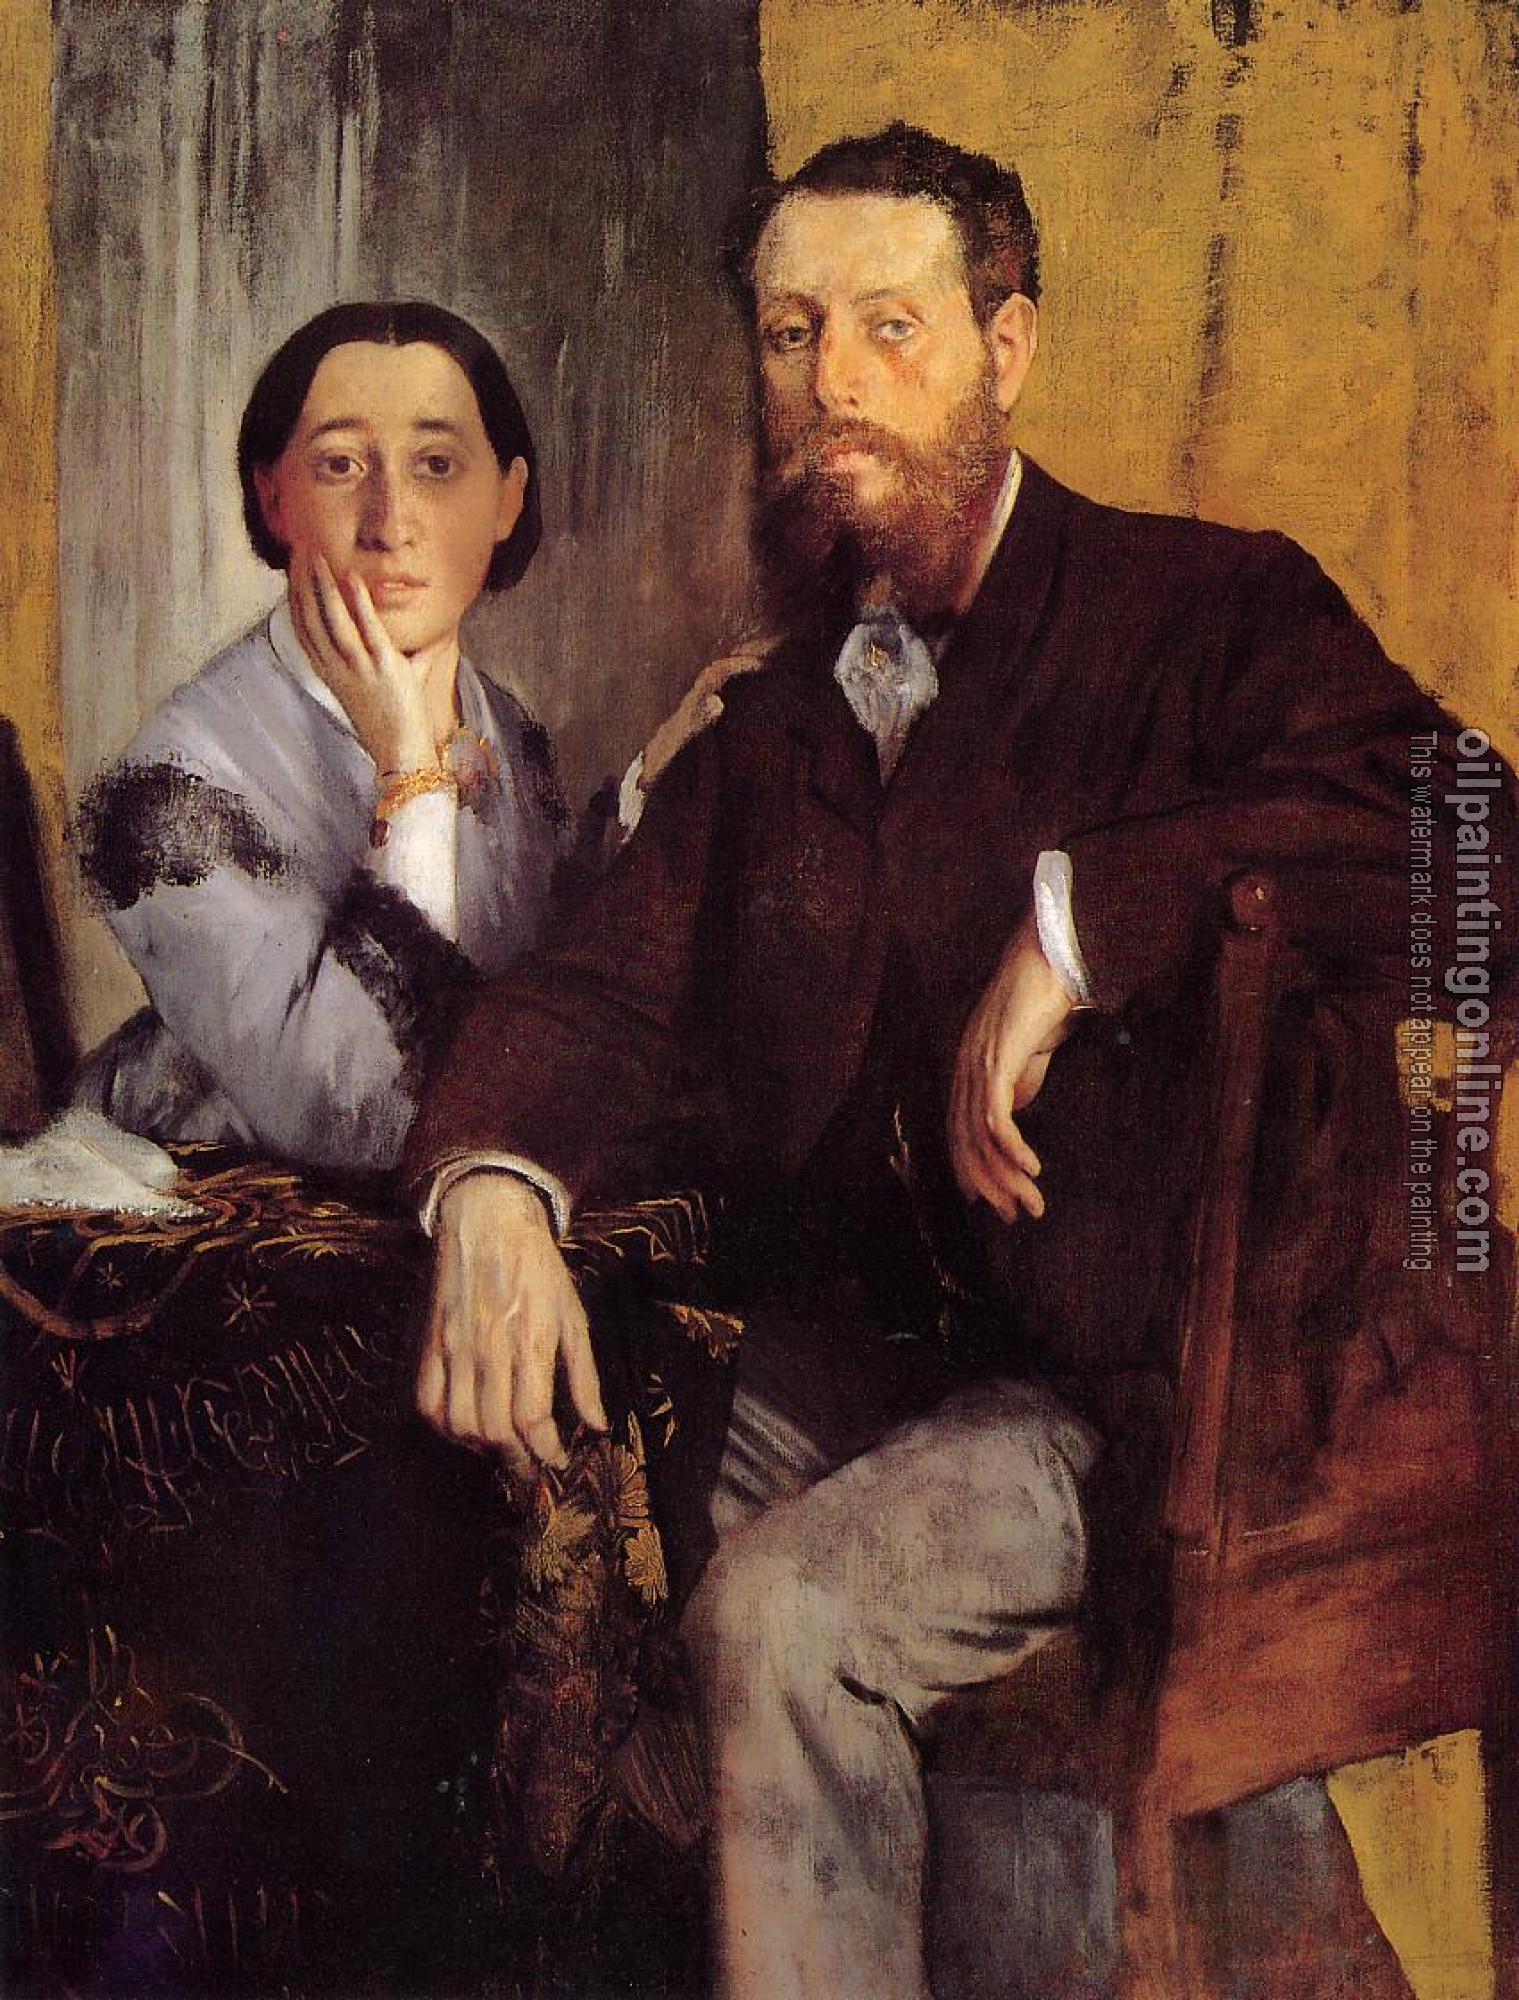 Degas, Edgar - Edmond and Therese Morbilli